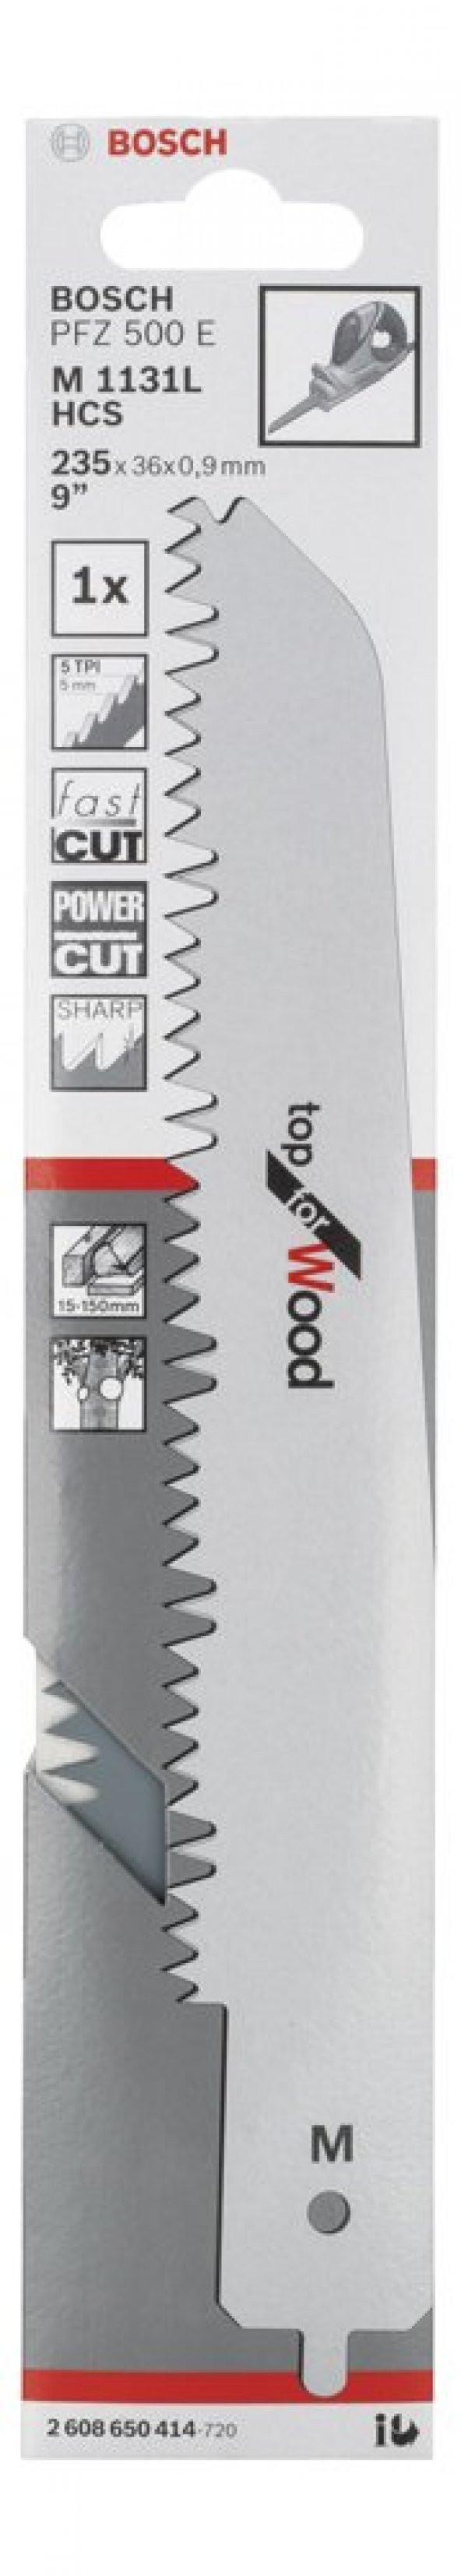 Bosch - Top Serisi PFZ 500 E Uyumlu Ahşap için Panter Testere Bıçağı M 1131 L 1li